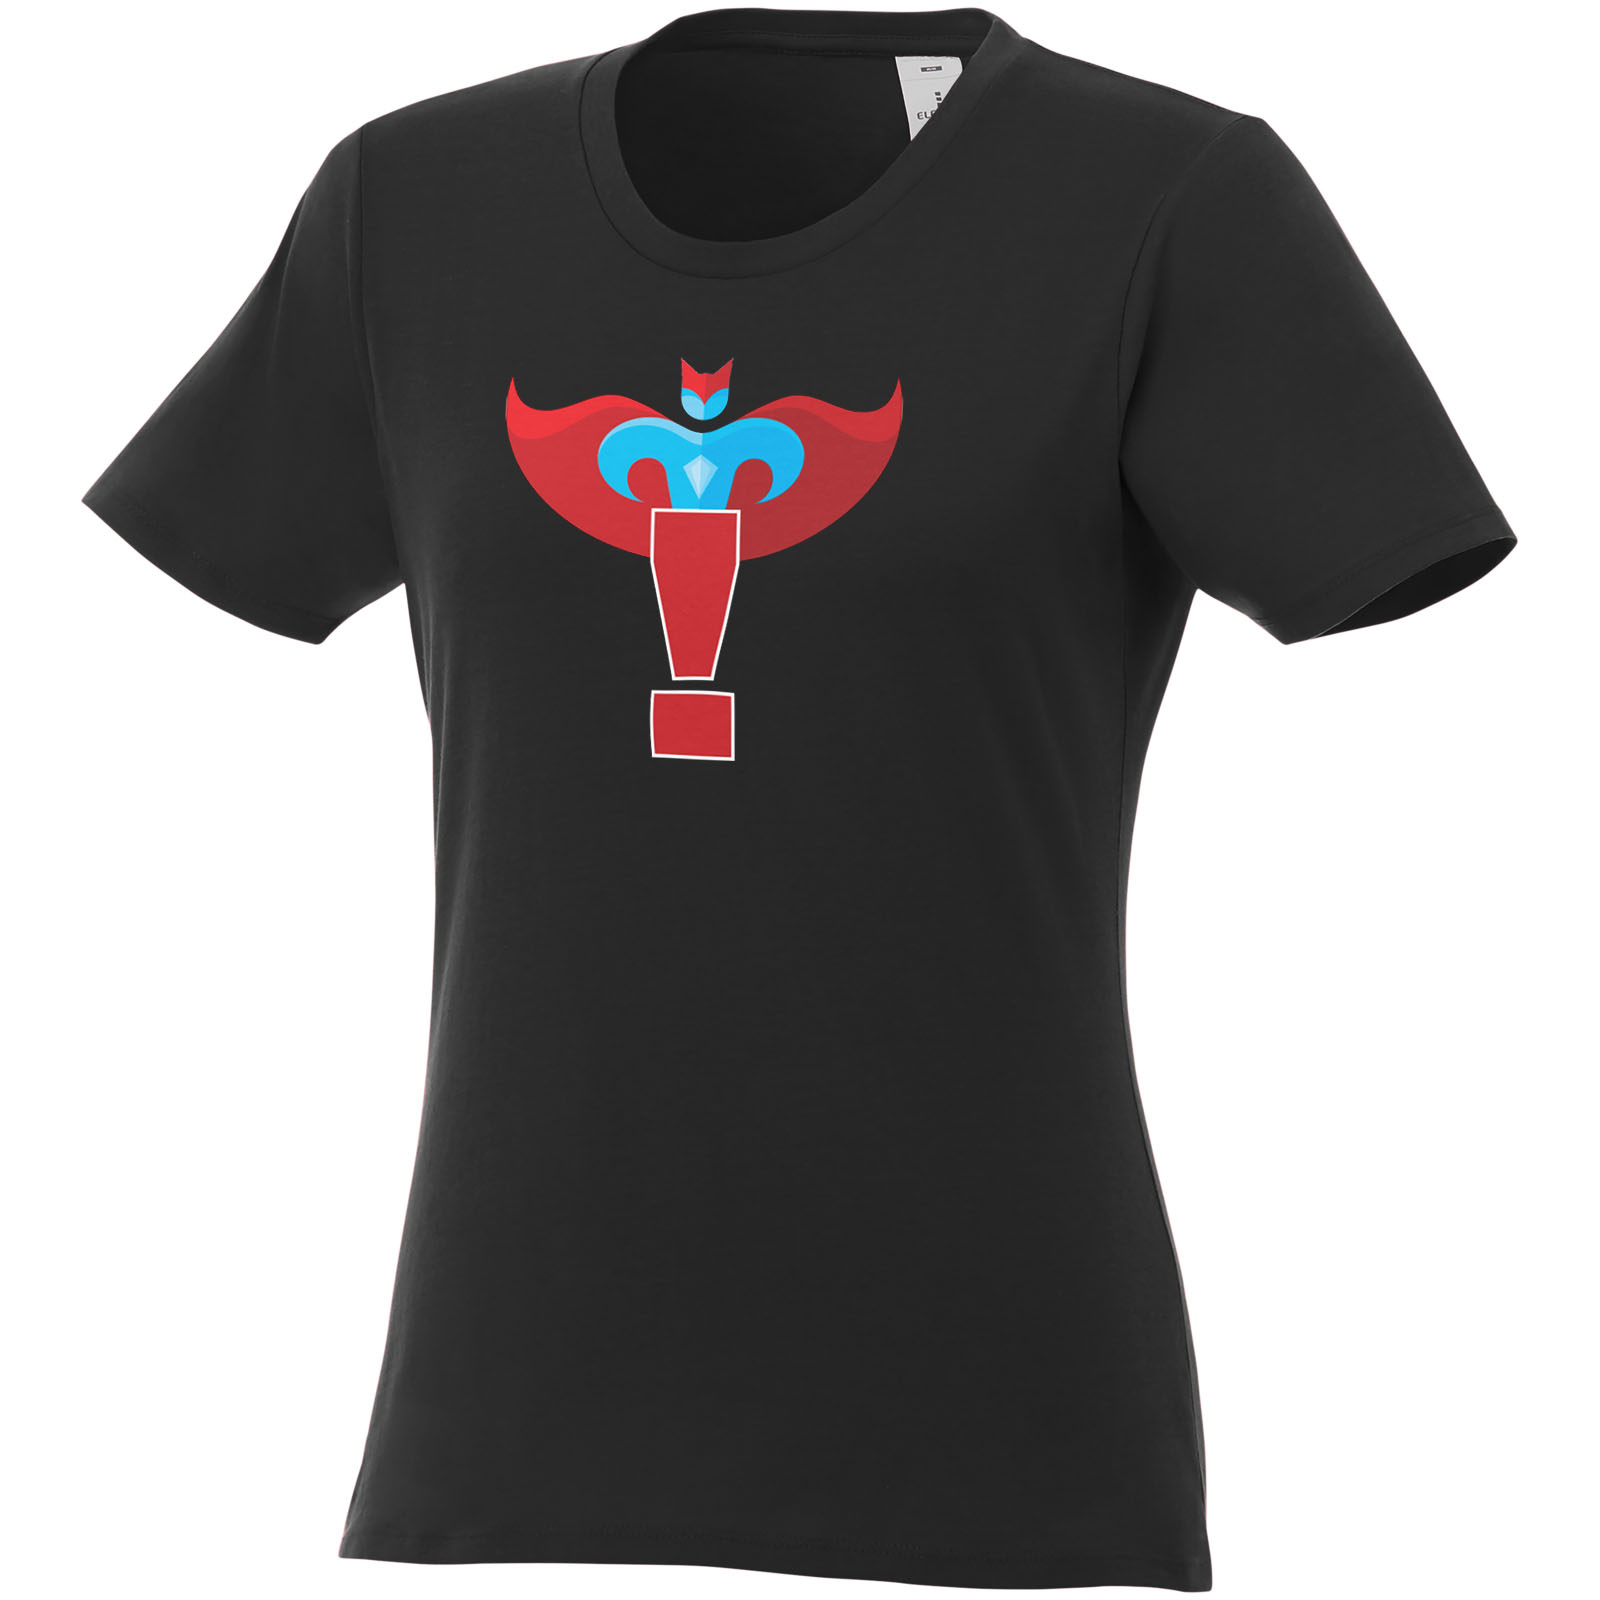 Heros short sleeve women's t-shirt